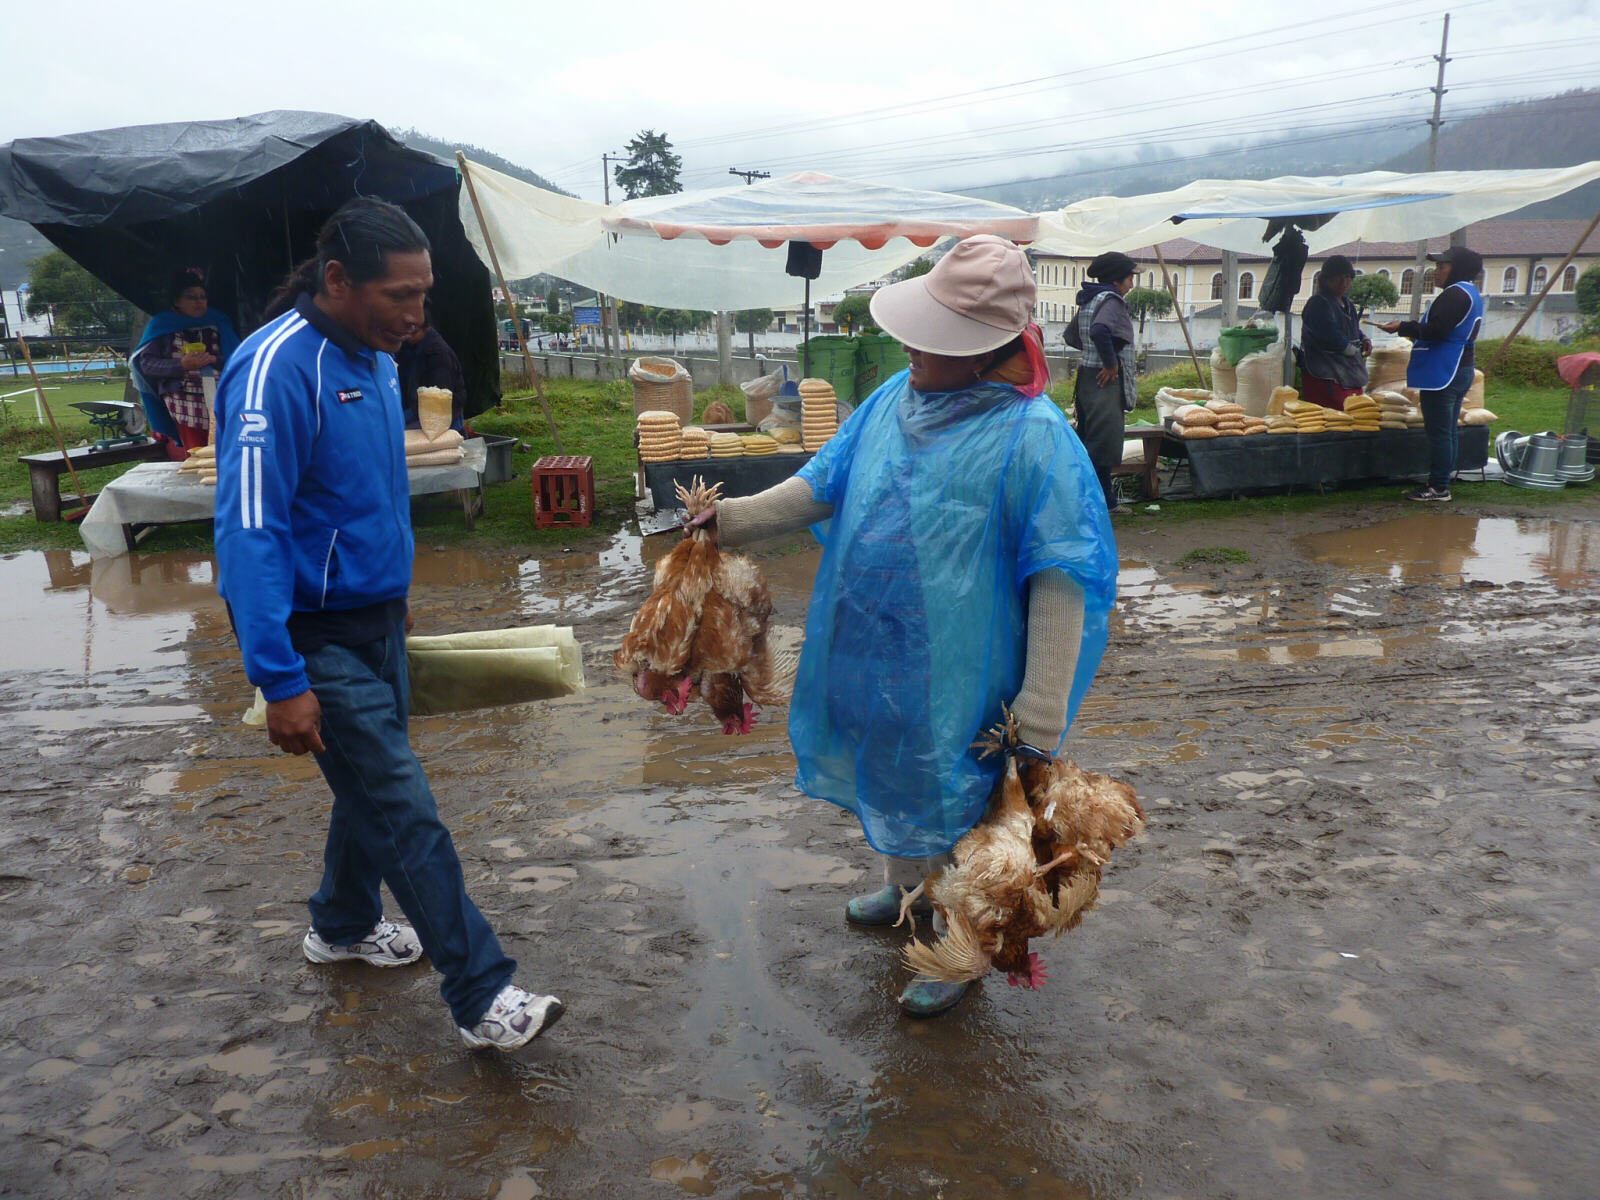 Chicken seller in Otavalo animal market, Ecuador